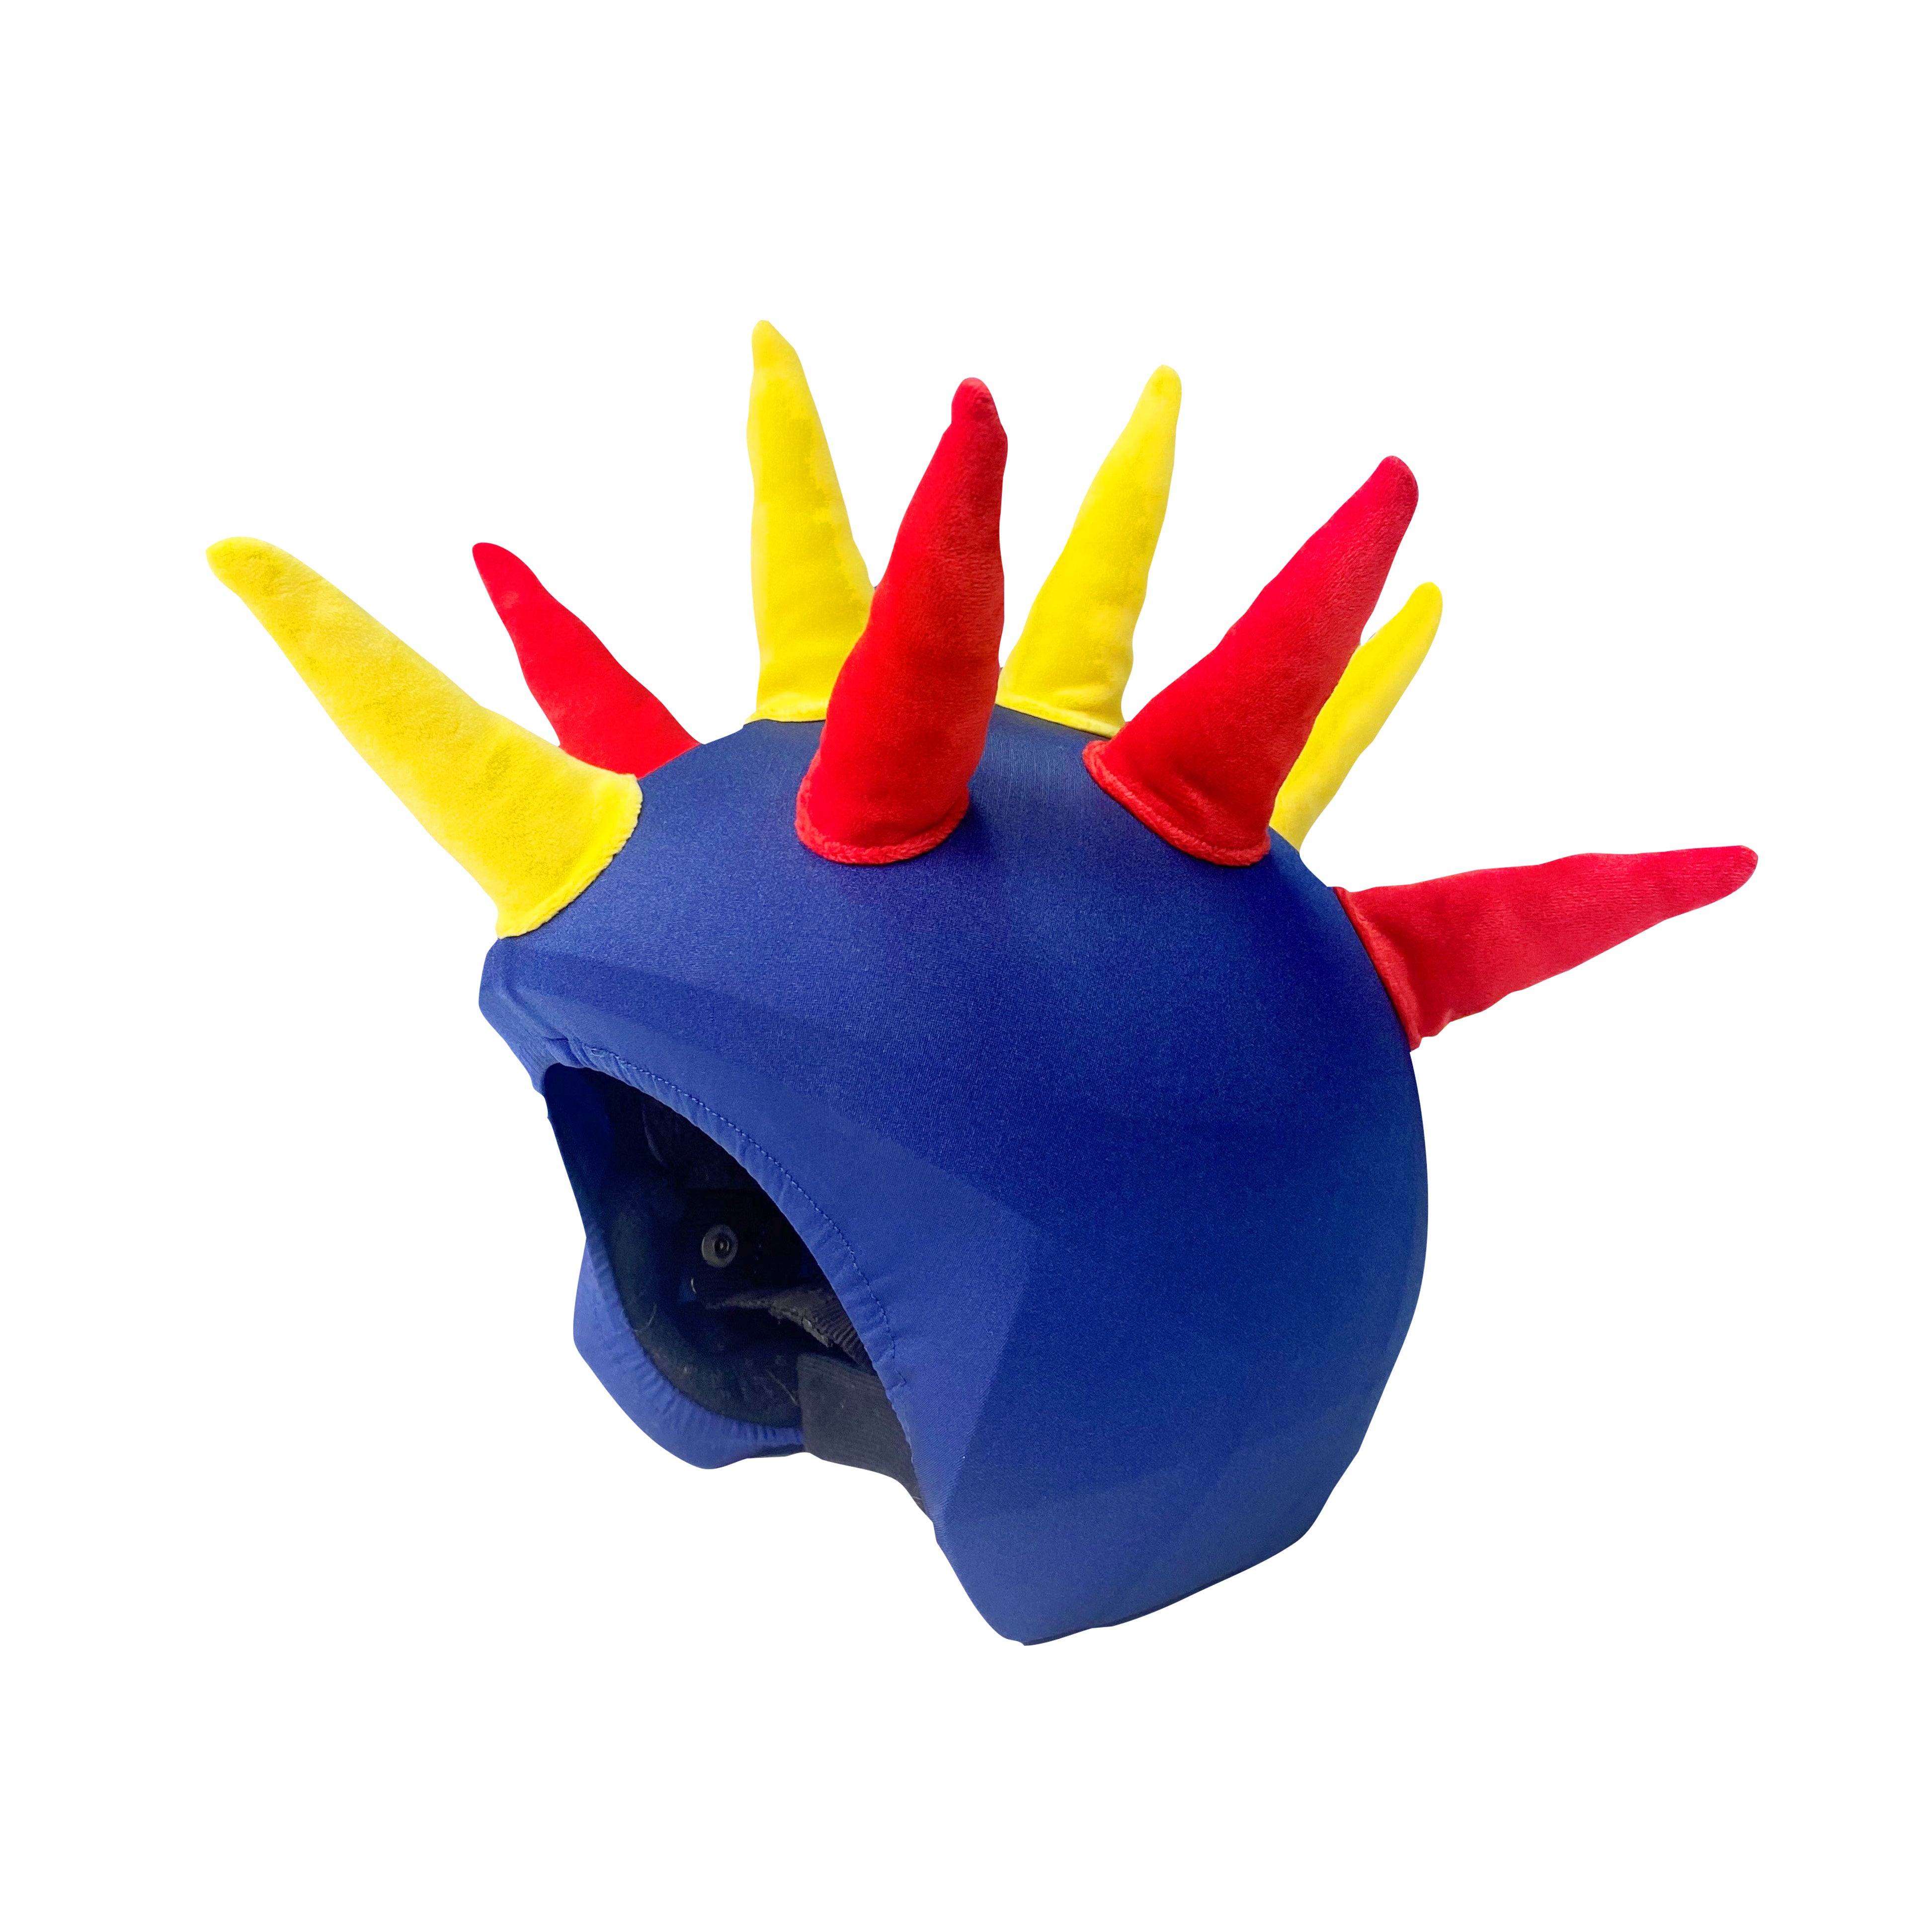 Coolcasc Spain Spike Helmet Cover